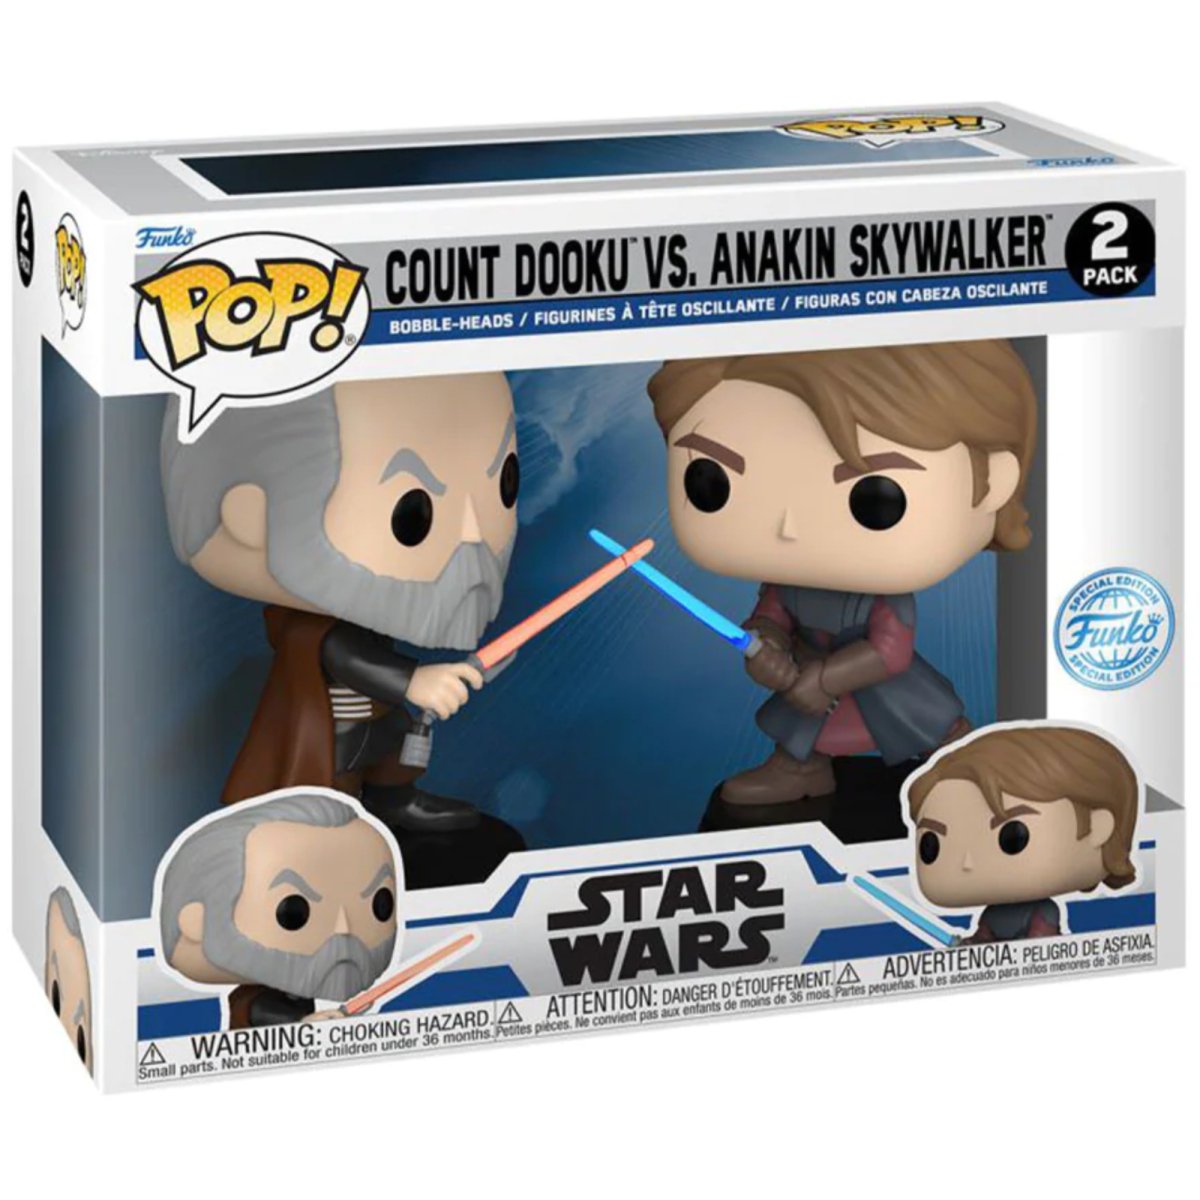 Star Wars - Count Dooku vs. Anakin Skywalker (Special Edition) 2 Pack - Funko Pop! Vinyl Star Wars - Persona Toys